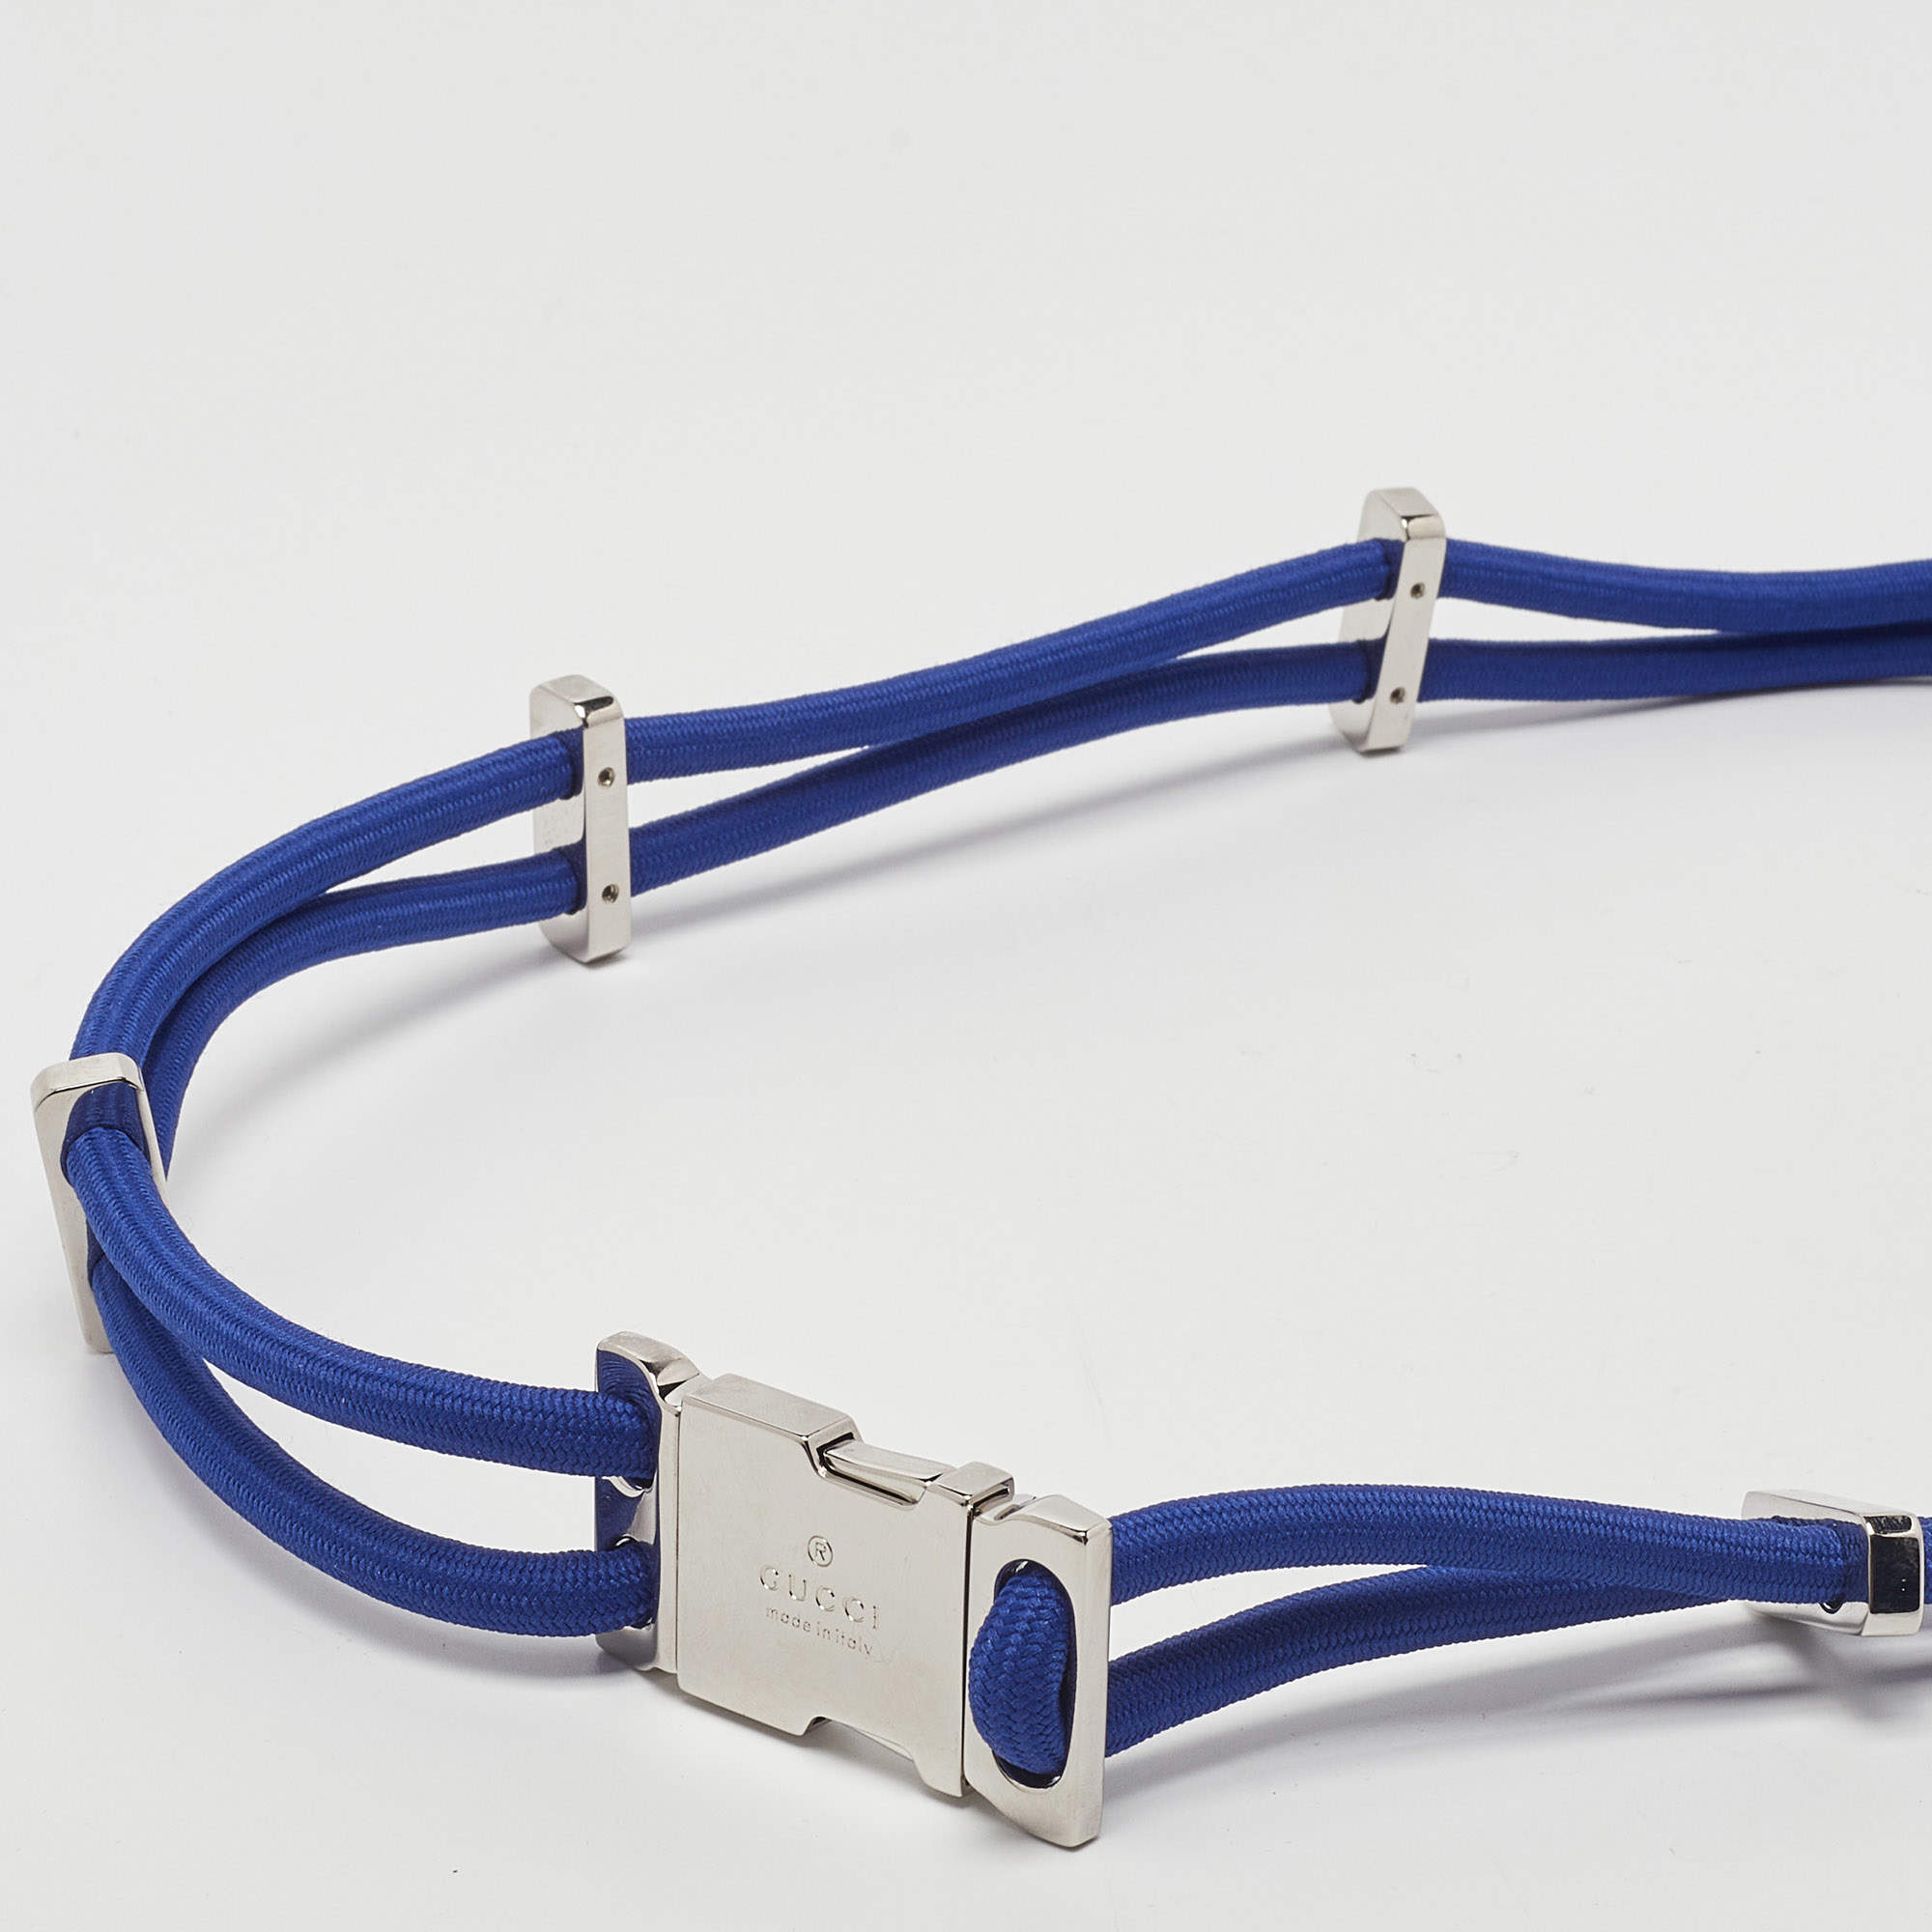 Gucci, Accessories, Gucci Belt In Navy Blue